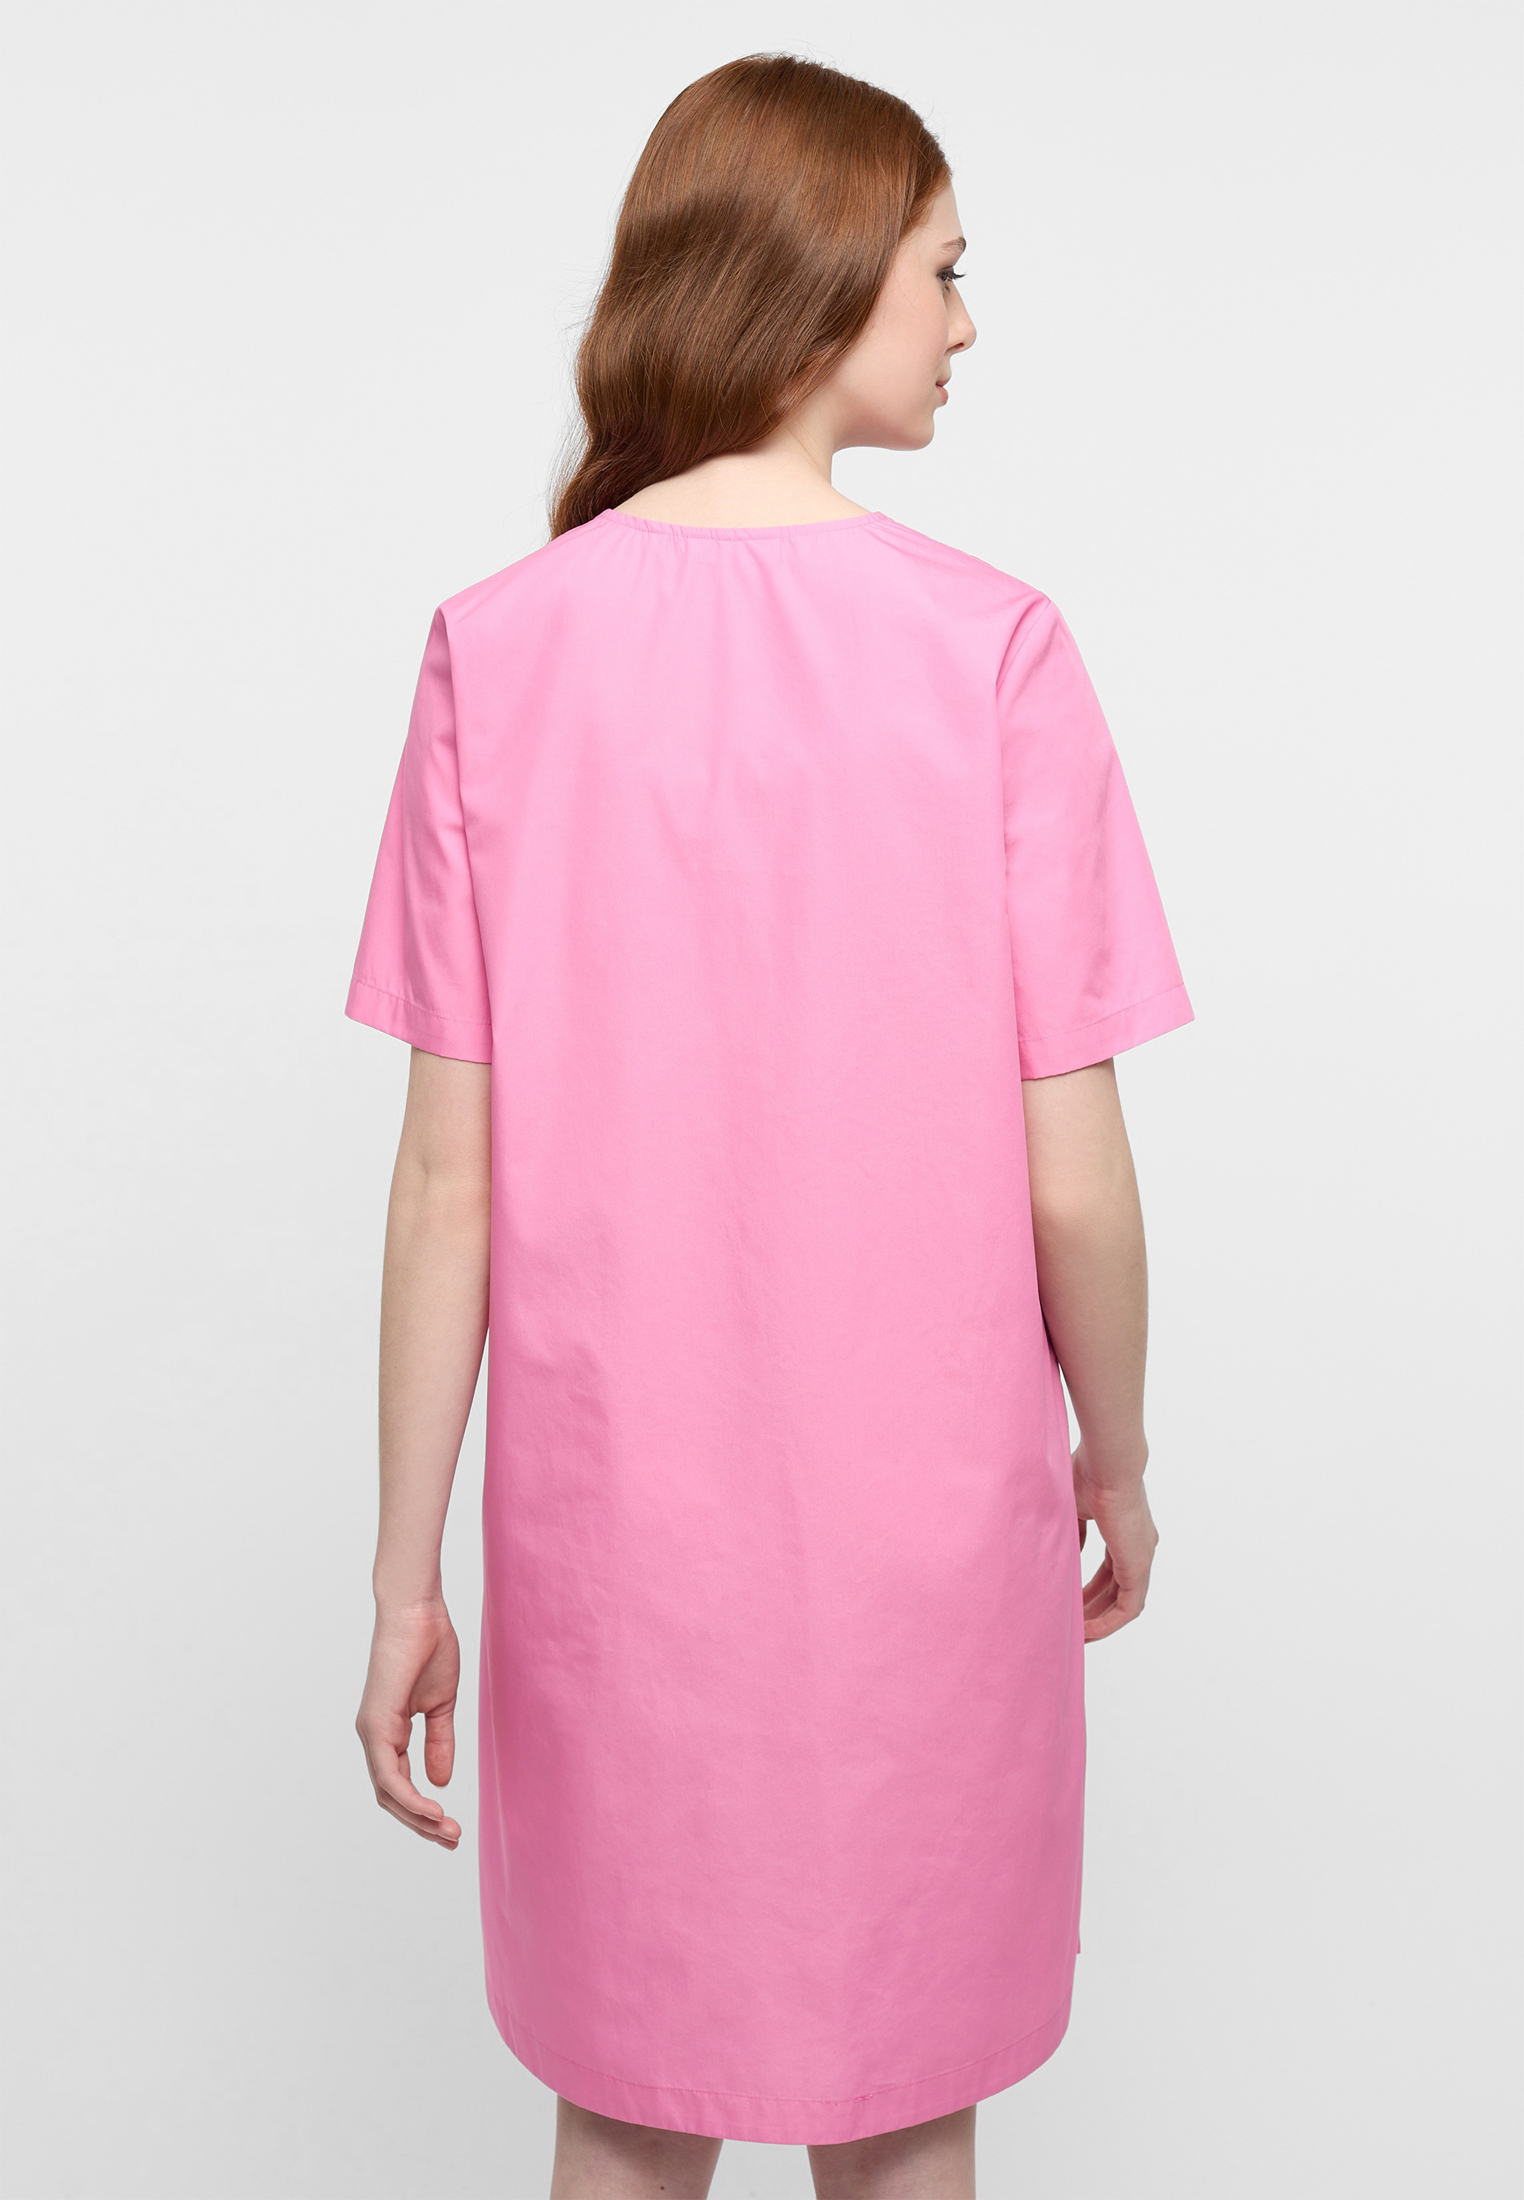 Shirt dress 34 plain sleeve | | 2DR00211-15-21-34-1/2 | short in pink | pink